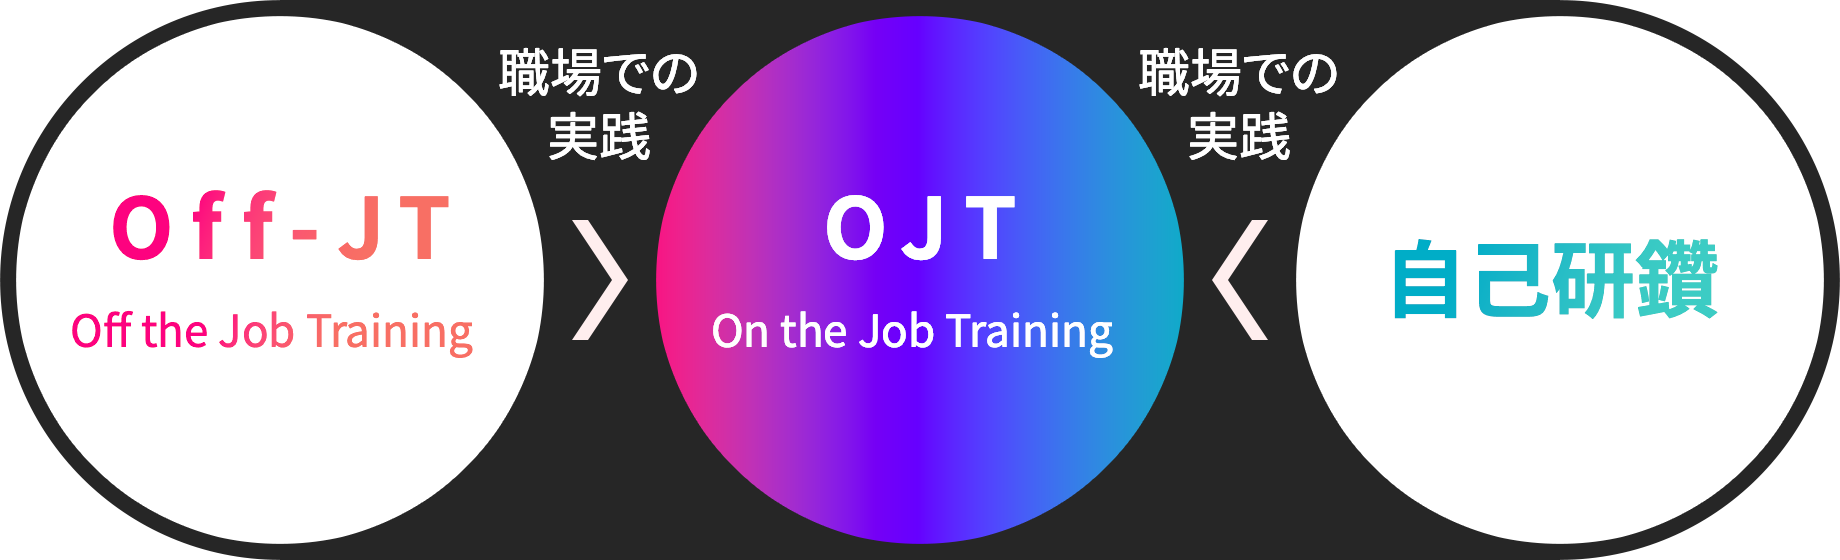 Off-JT Off the Job Training > 職場での実践 > OJT Om the Job Traning < 職場での実践　自己研鑽